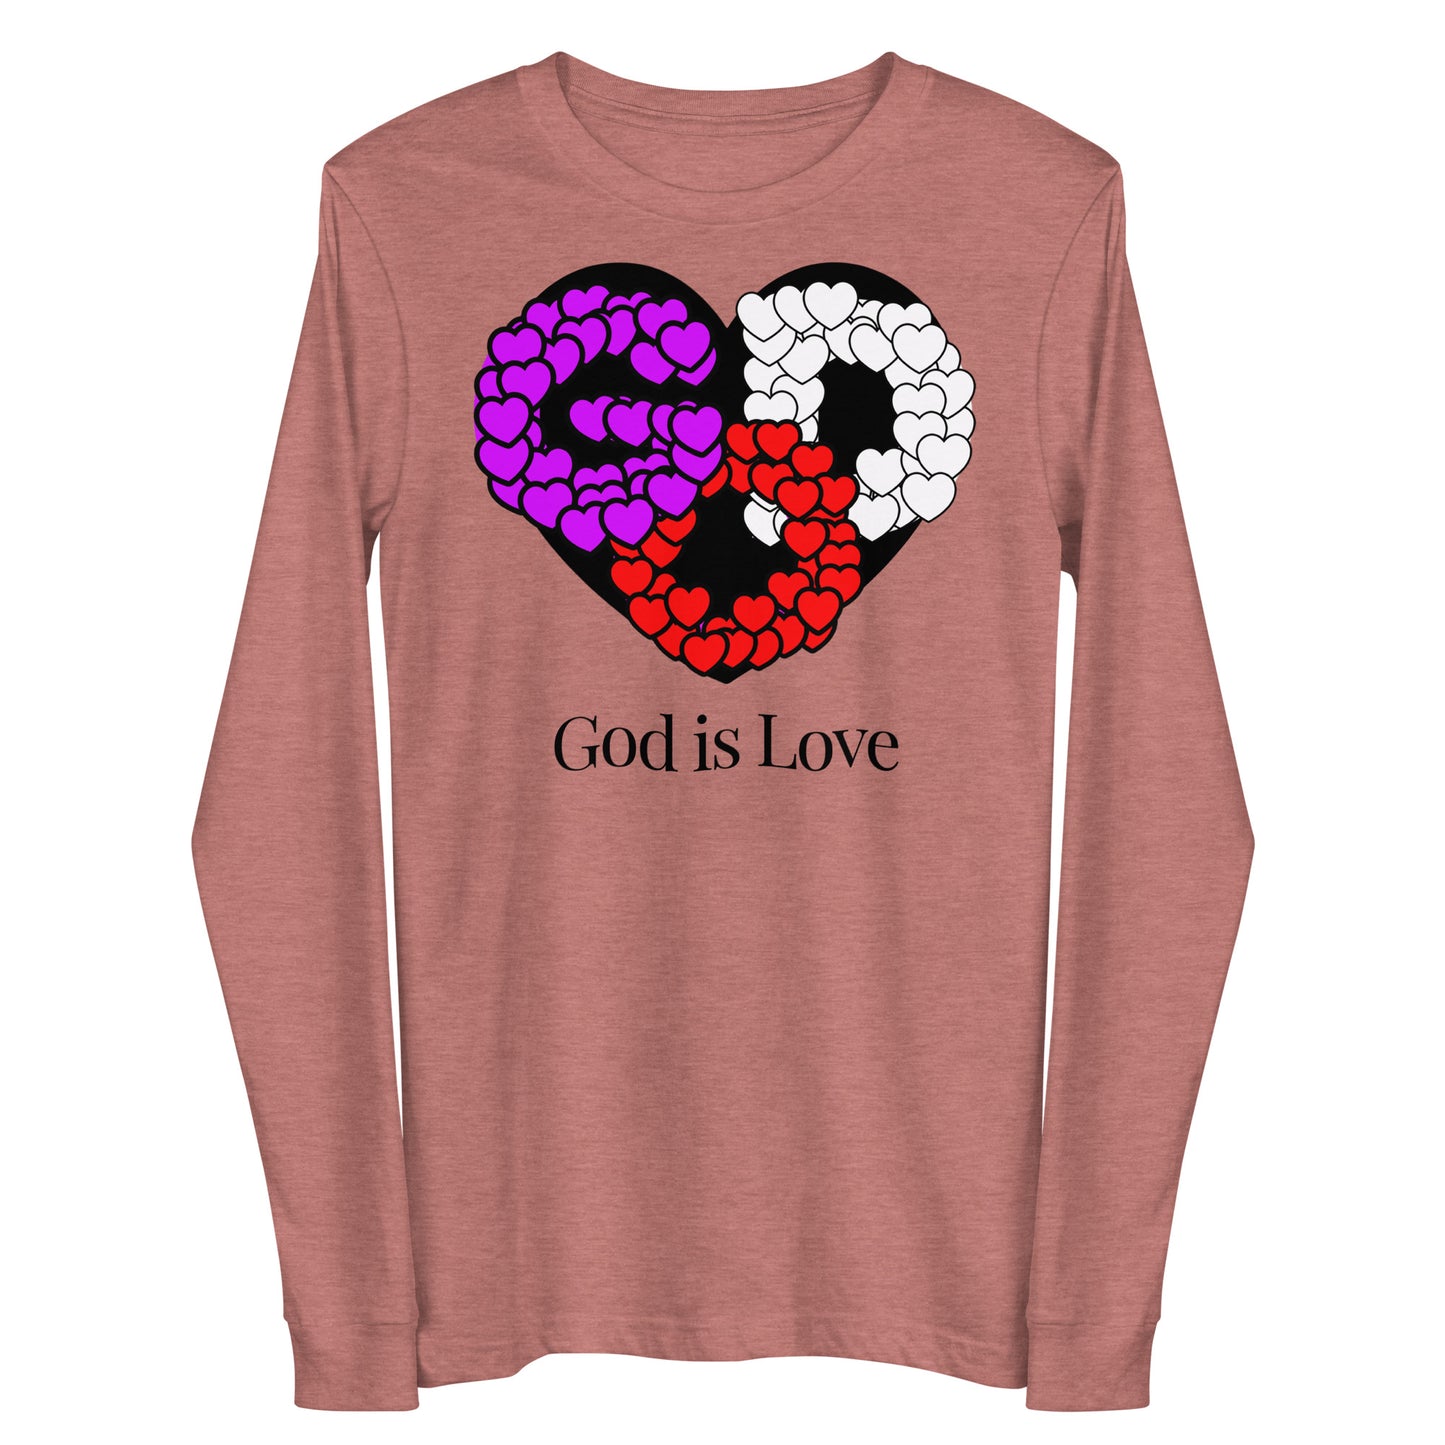 God is Love Women's Long Sleeve Tee